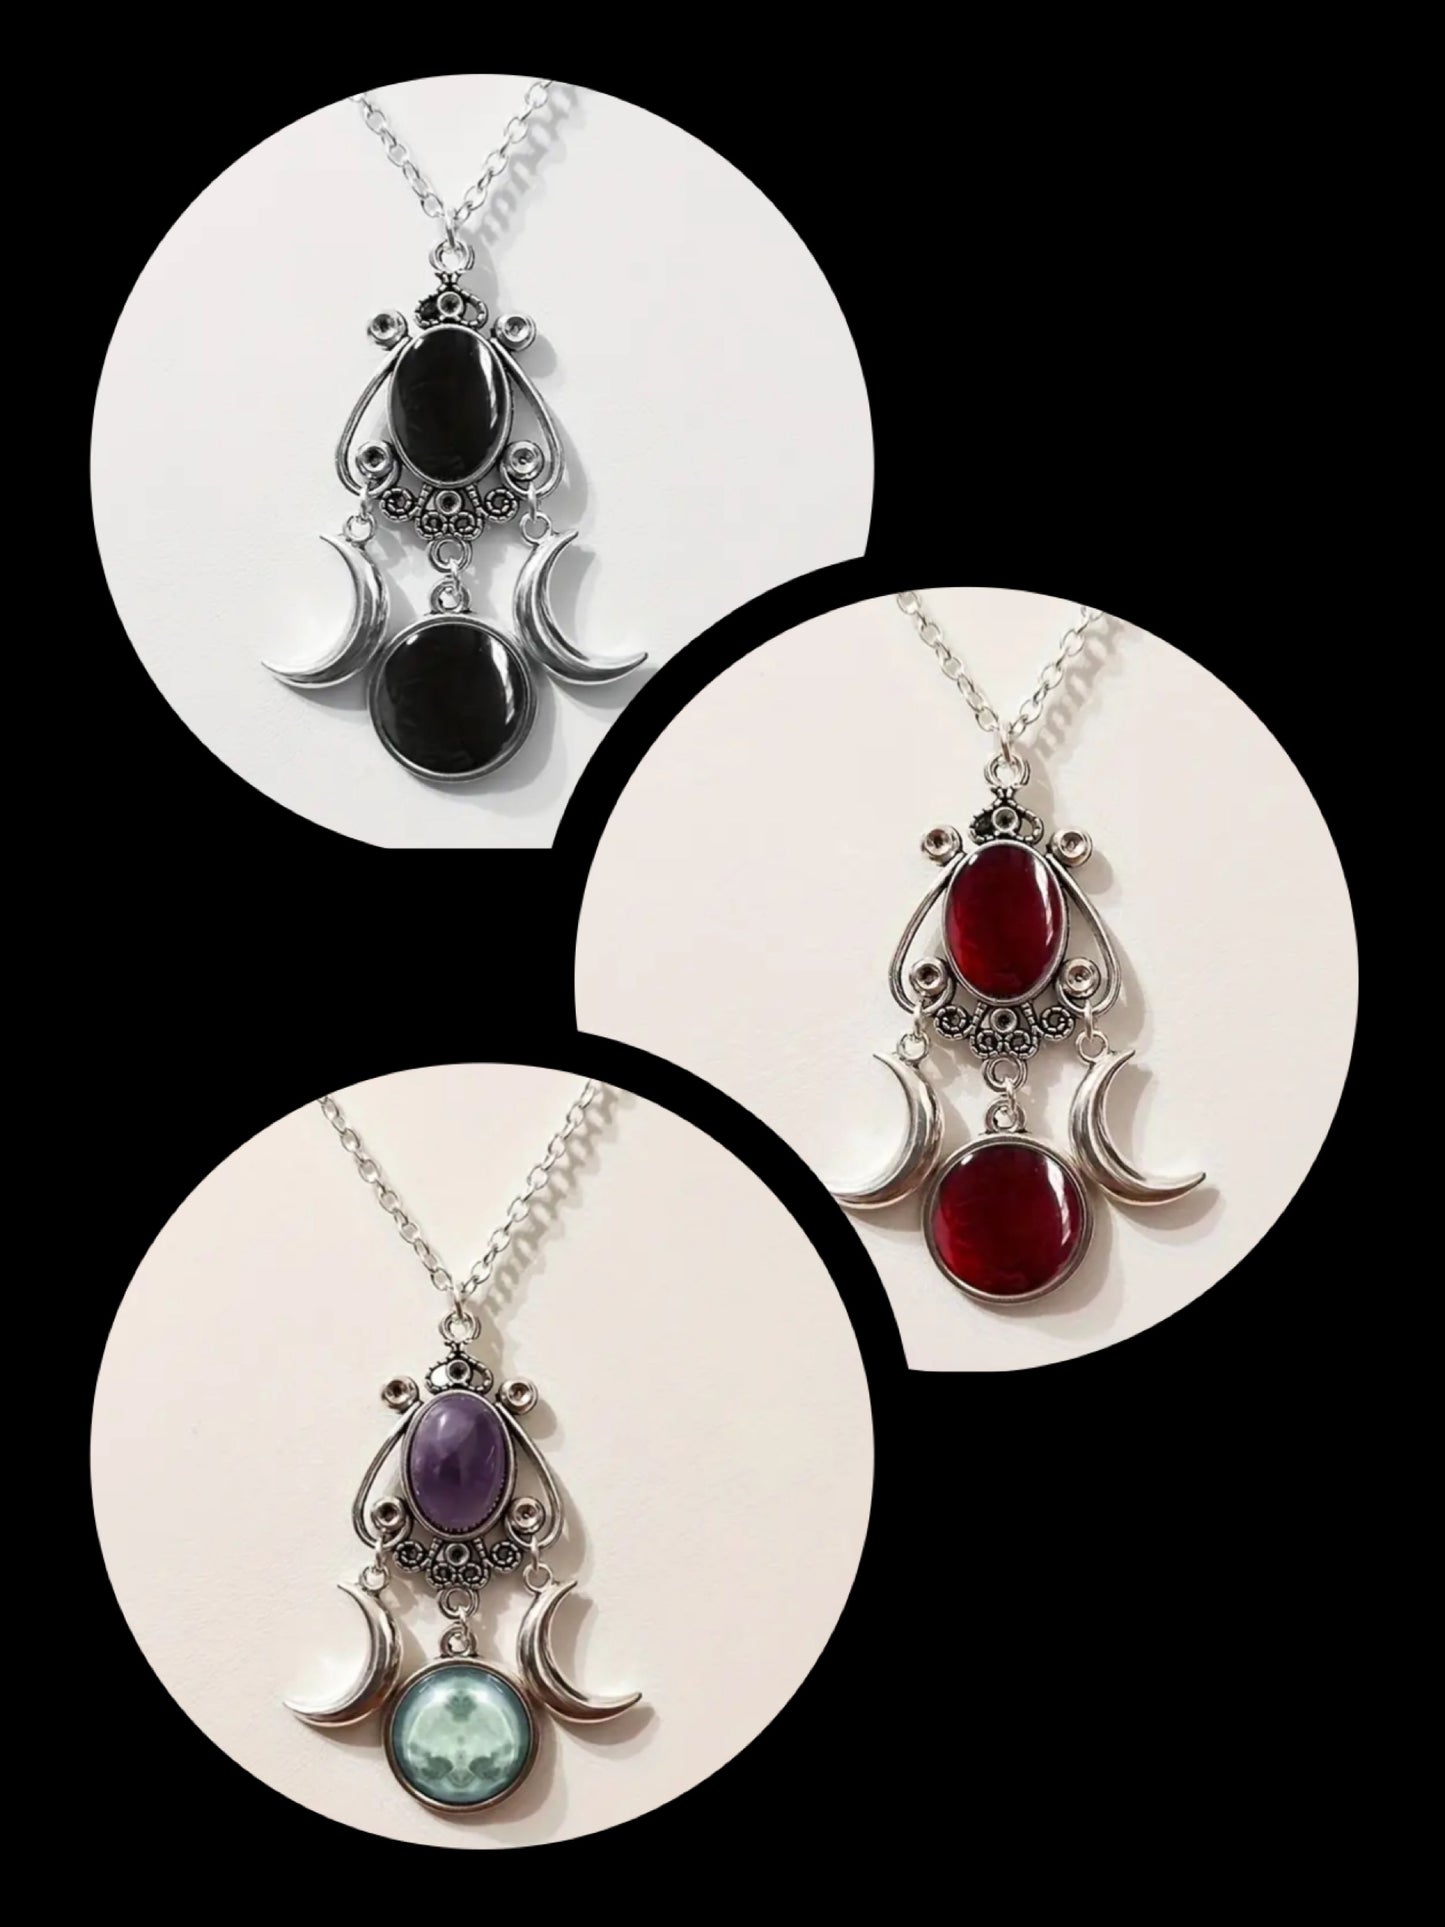 Triple Moon Goddess Stone Necklaces